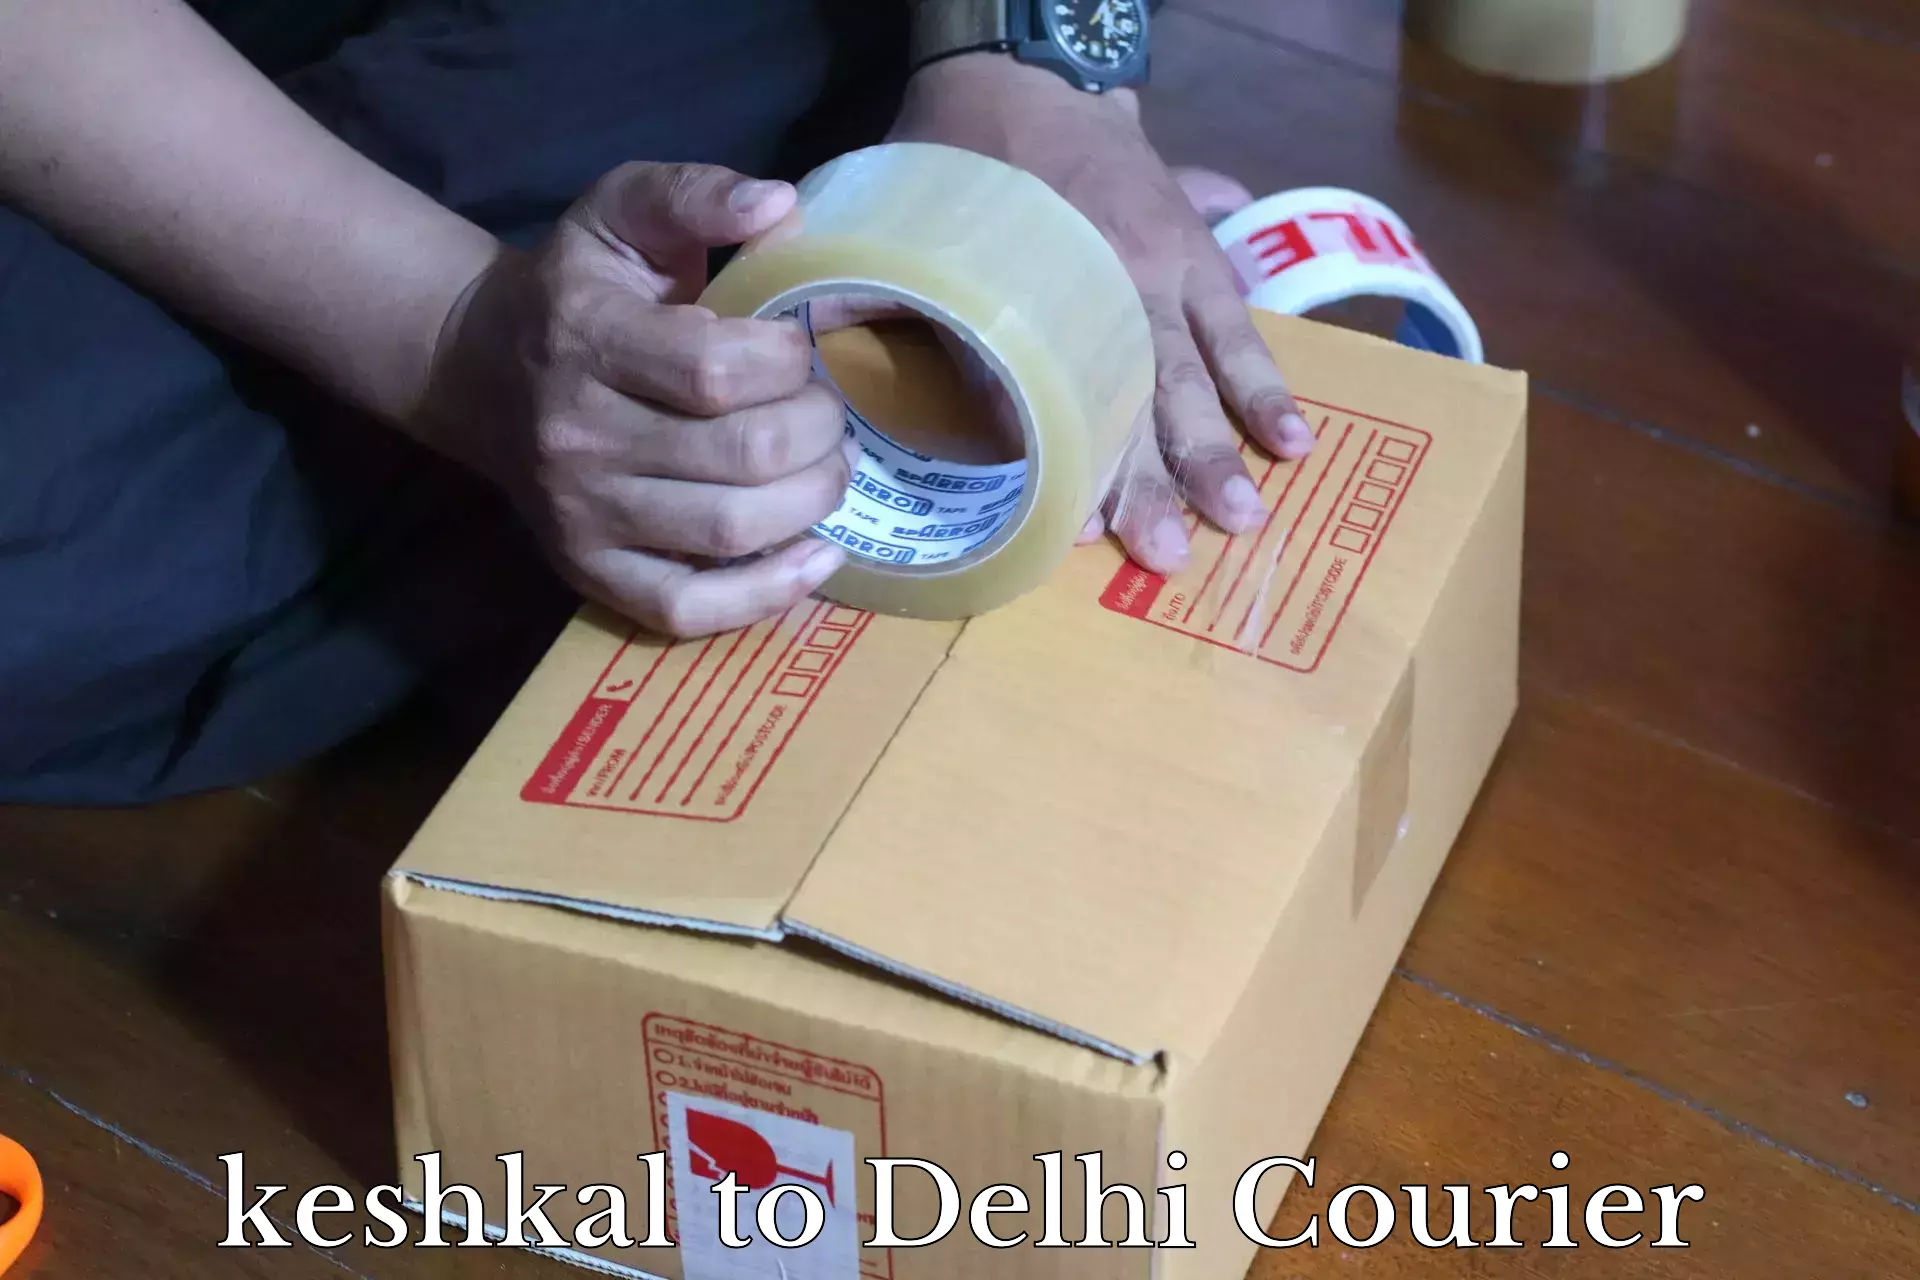 Express mail service keshkal to Delhi